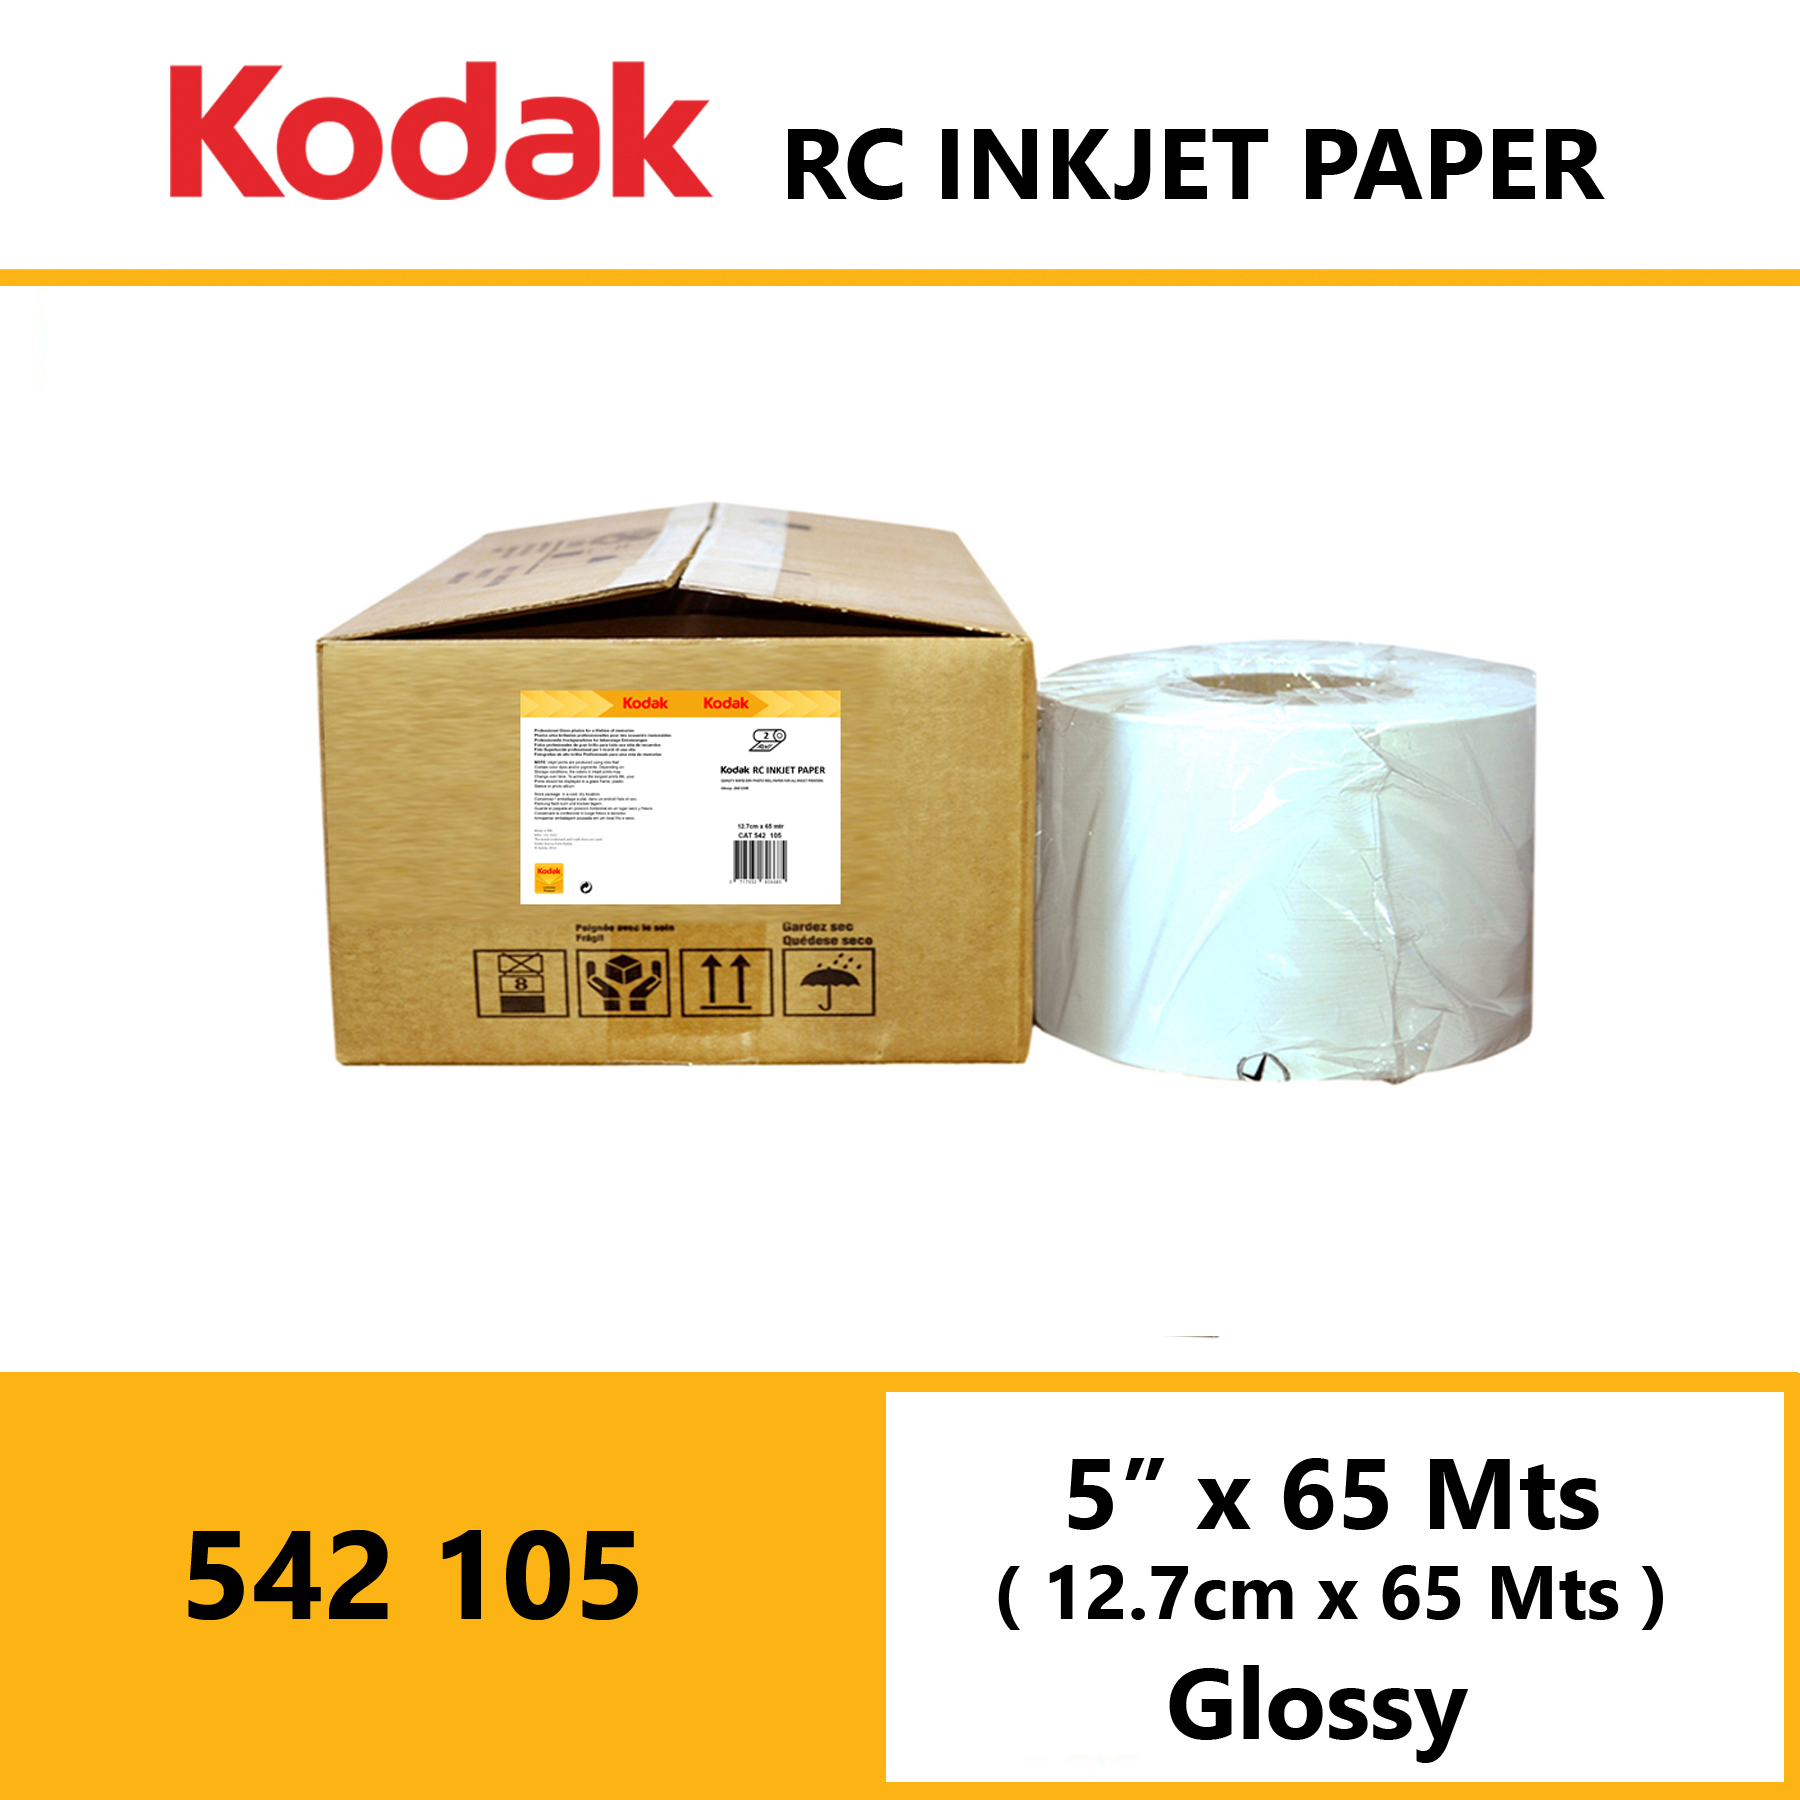 Kodak Inkjet RC Paper 5 ” x 65 Mtrs Glossy